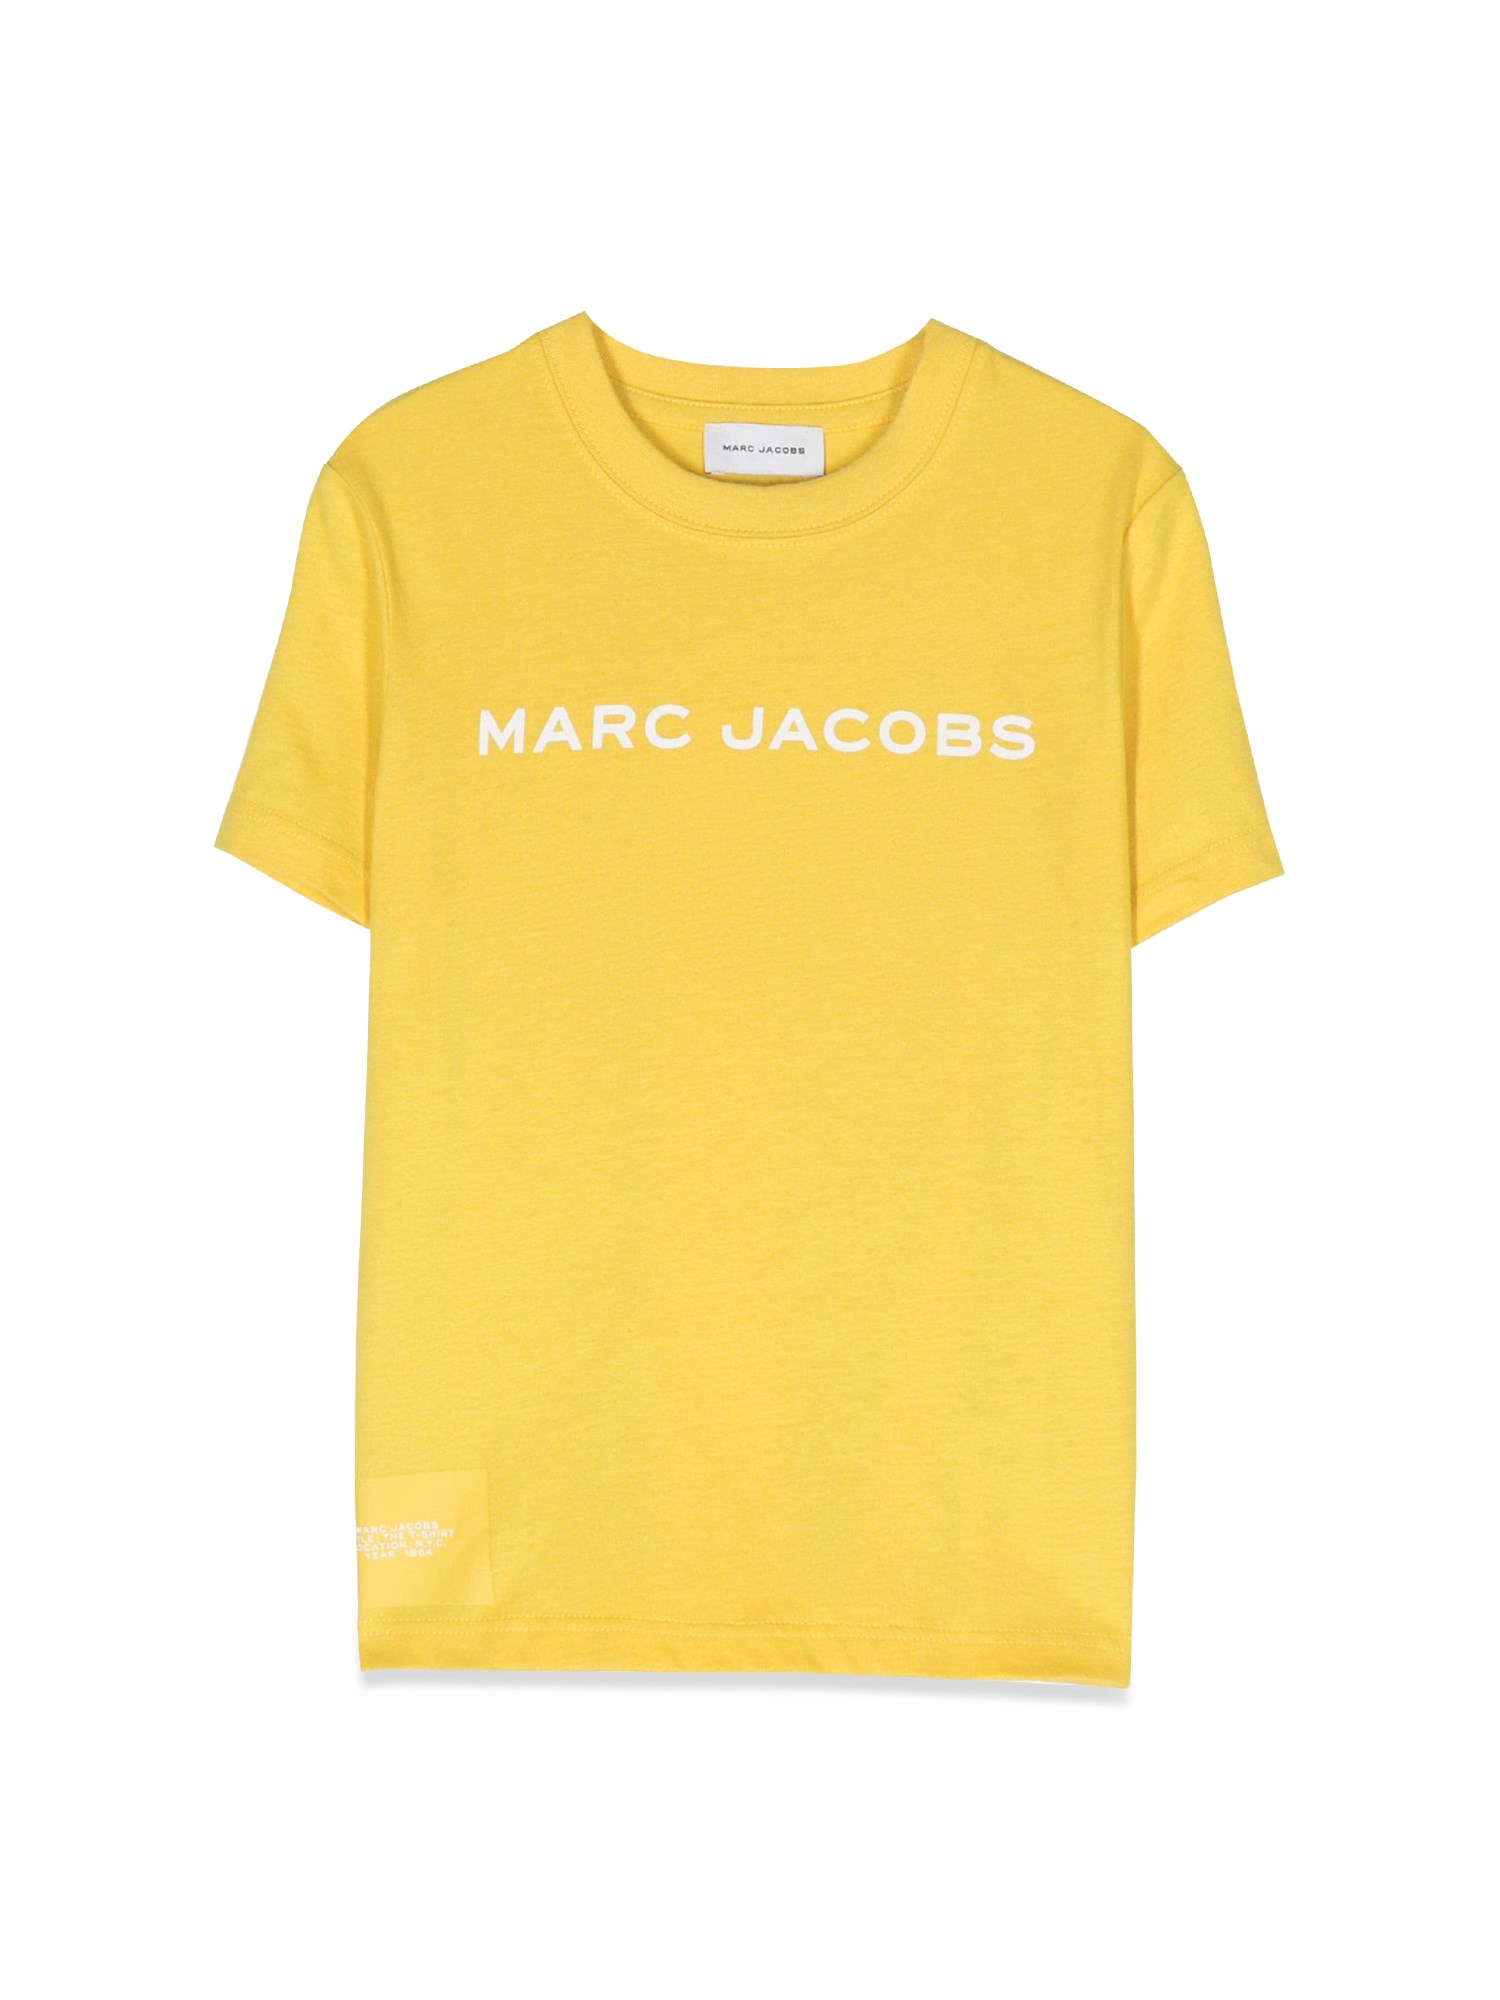 marc jacobs t-shirt logo